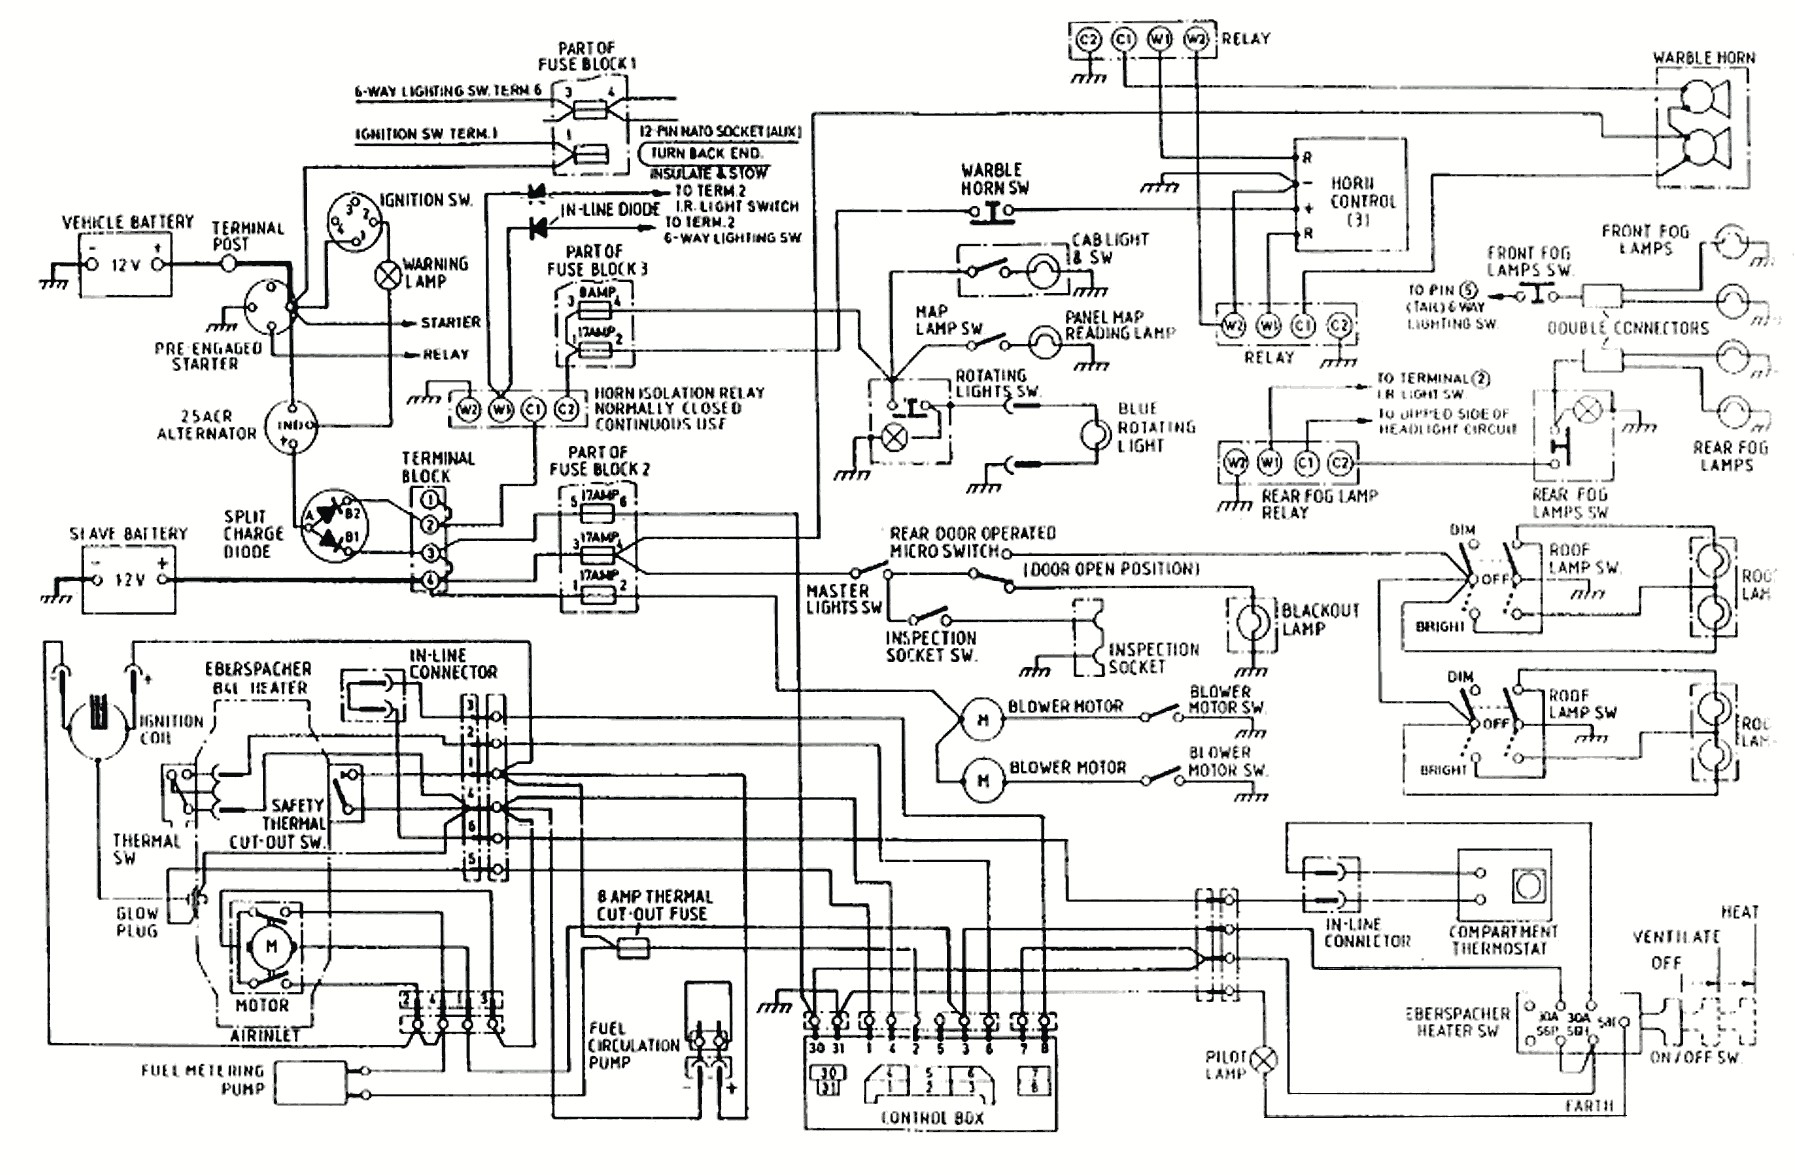 2003 ford Explorer Parts Diagram Wiring Diagram Fuse Drawings Wiring Info • Of 2003 ford Explorer Parts Diagram